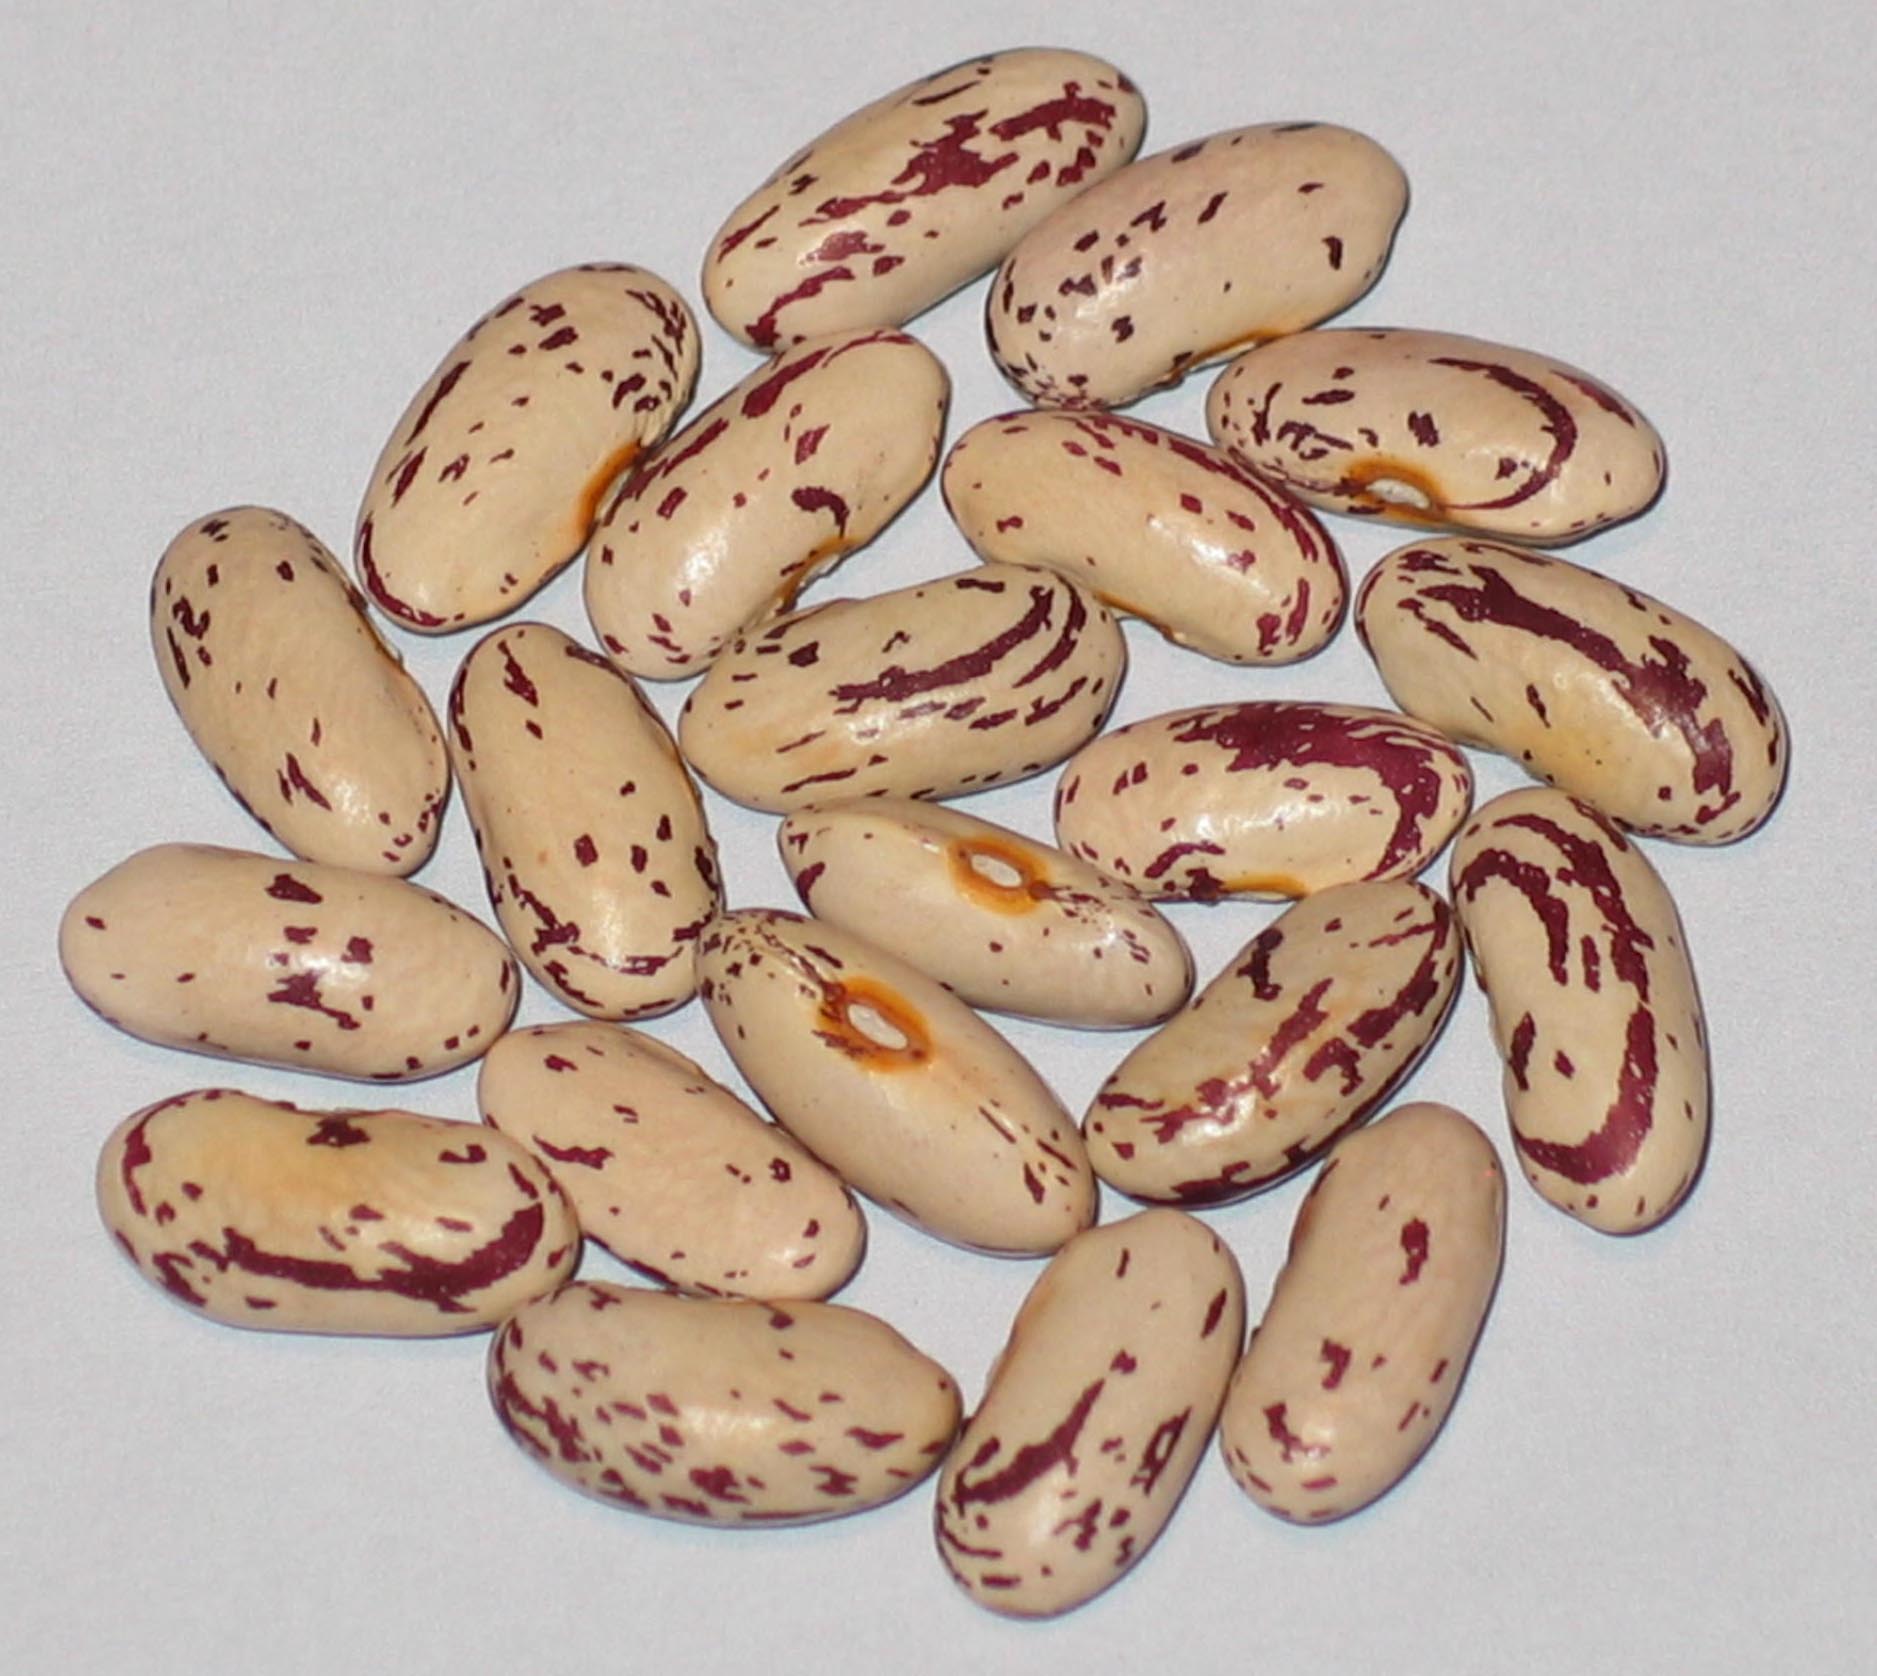 image of Missouri Bill's beans